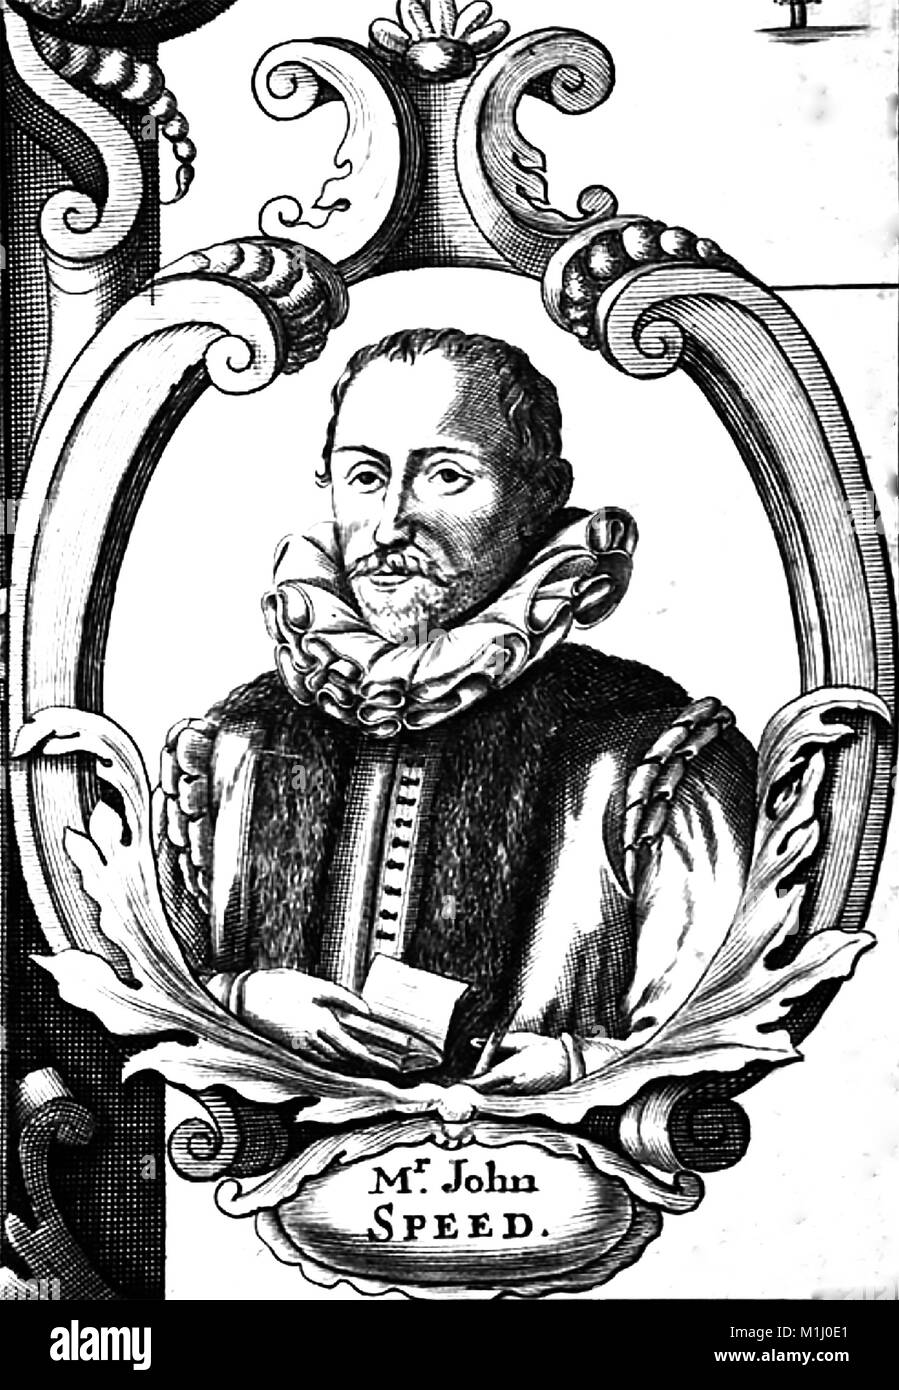 JOHN VELOCITÀ (1551/2 - 1629) cartrographer inglese Foto Stock